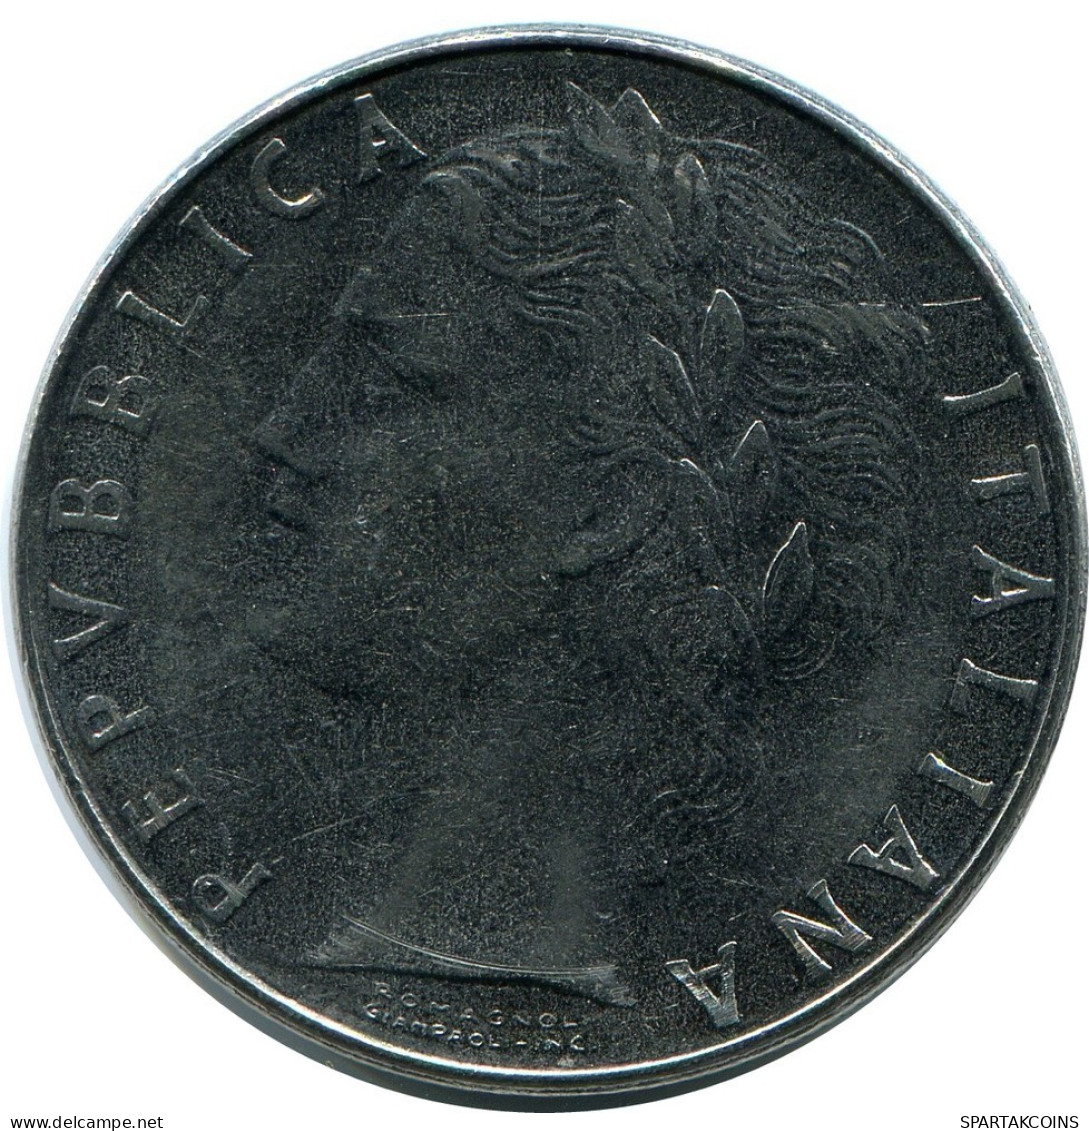 100 LIRE 1980 ITALY Coin #AZ487.U.A - 100 Liras